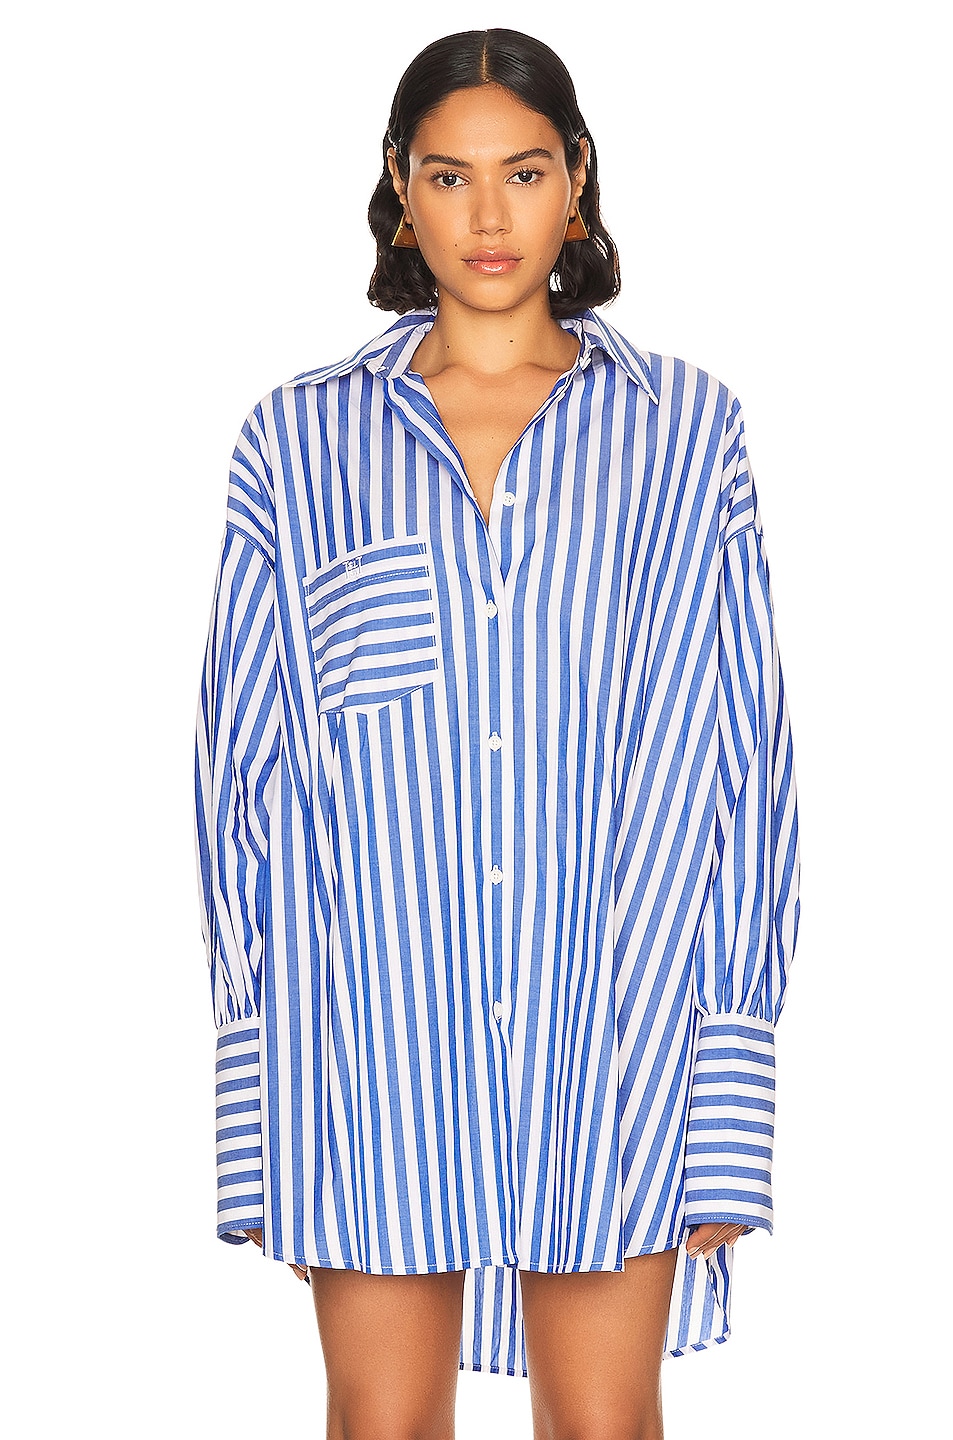 Helsa Cotton Poplin Oversized Shirt in Bright Blue Stripe | FWRD